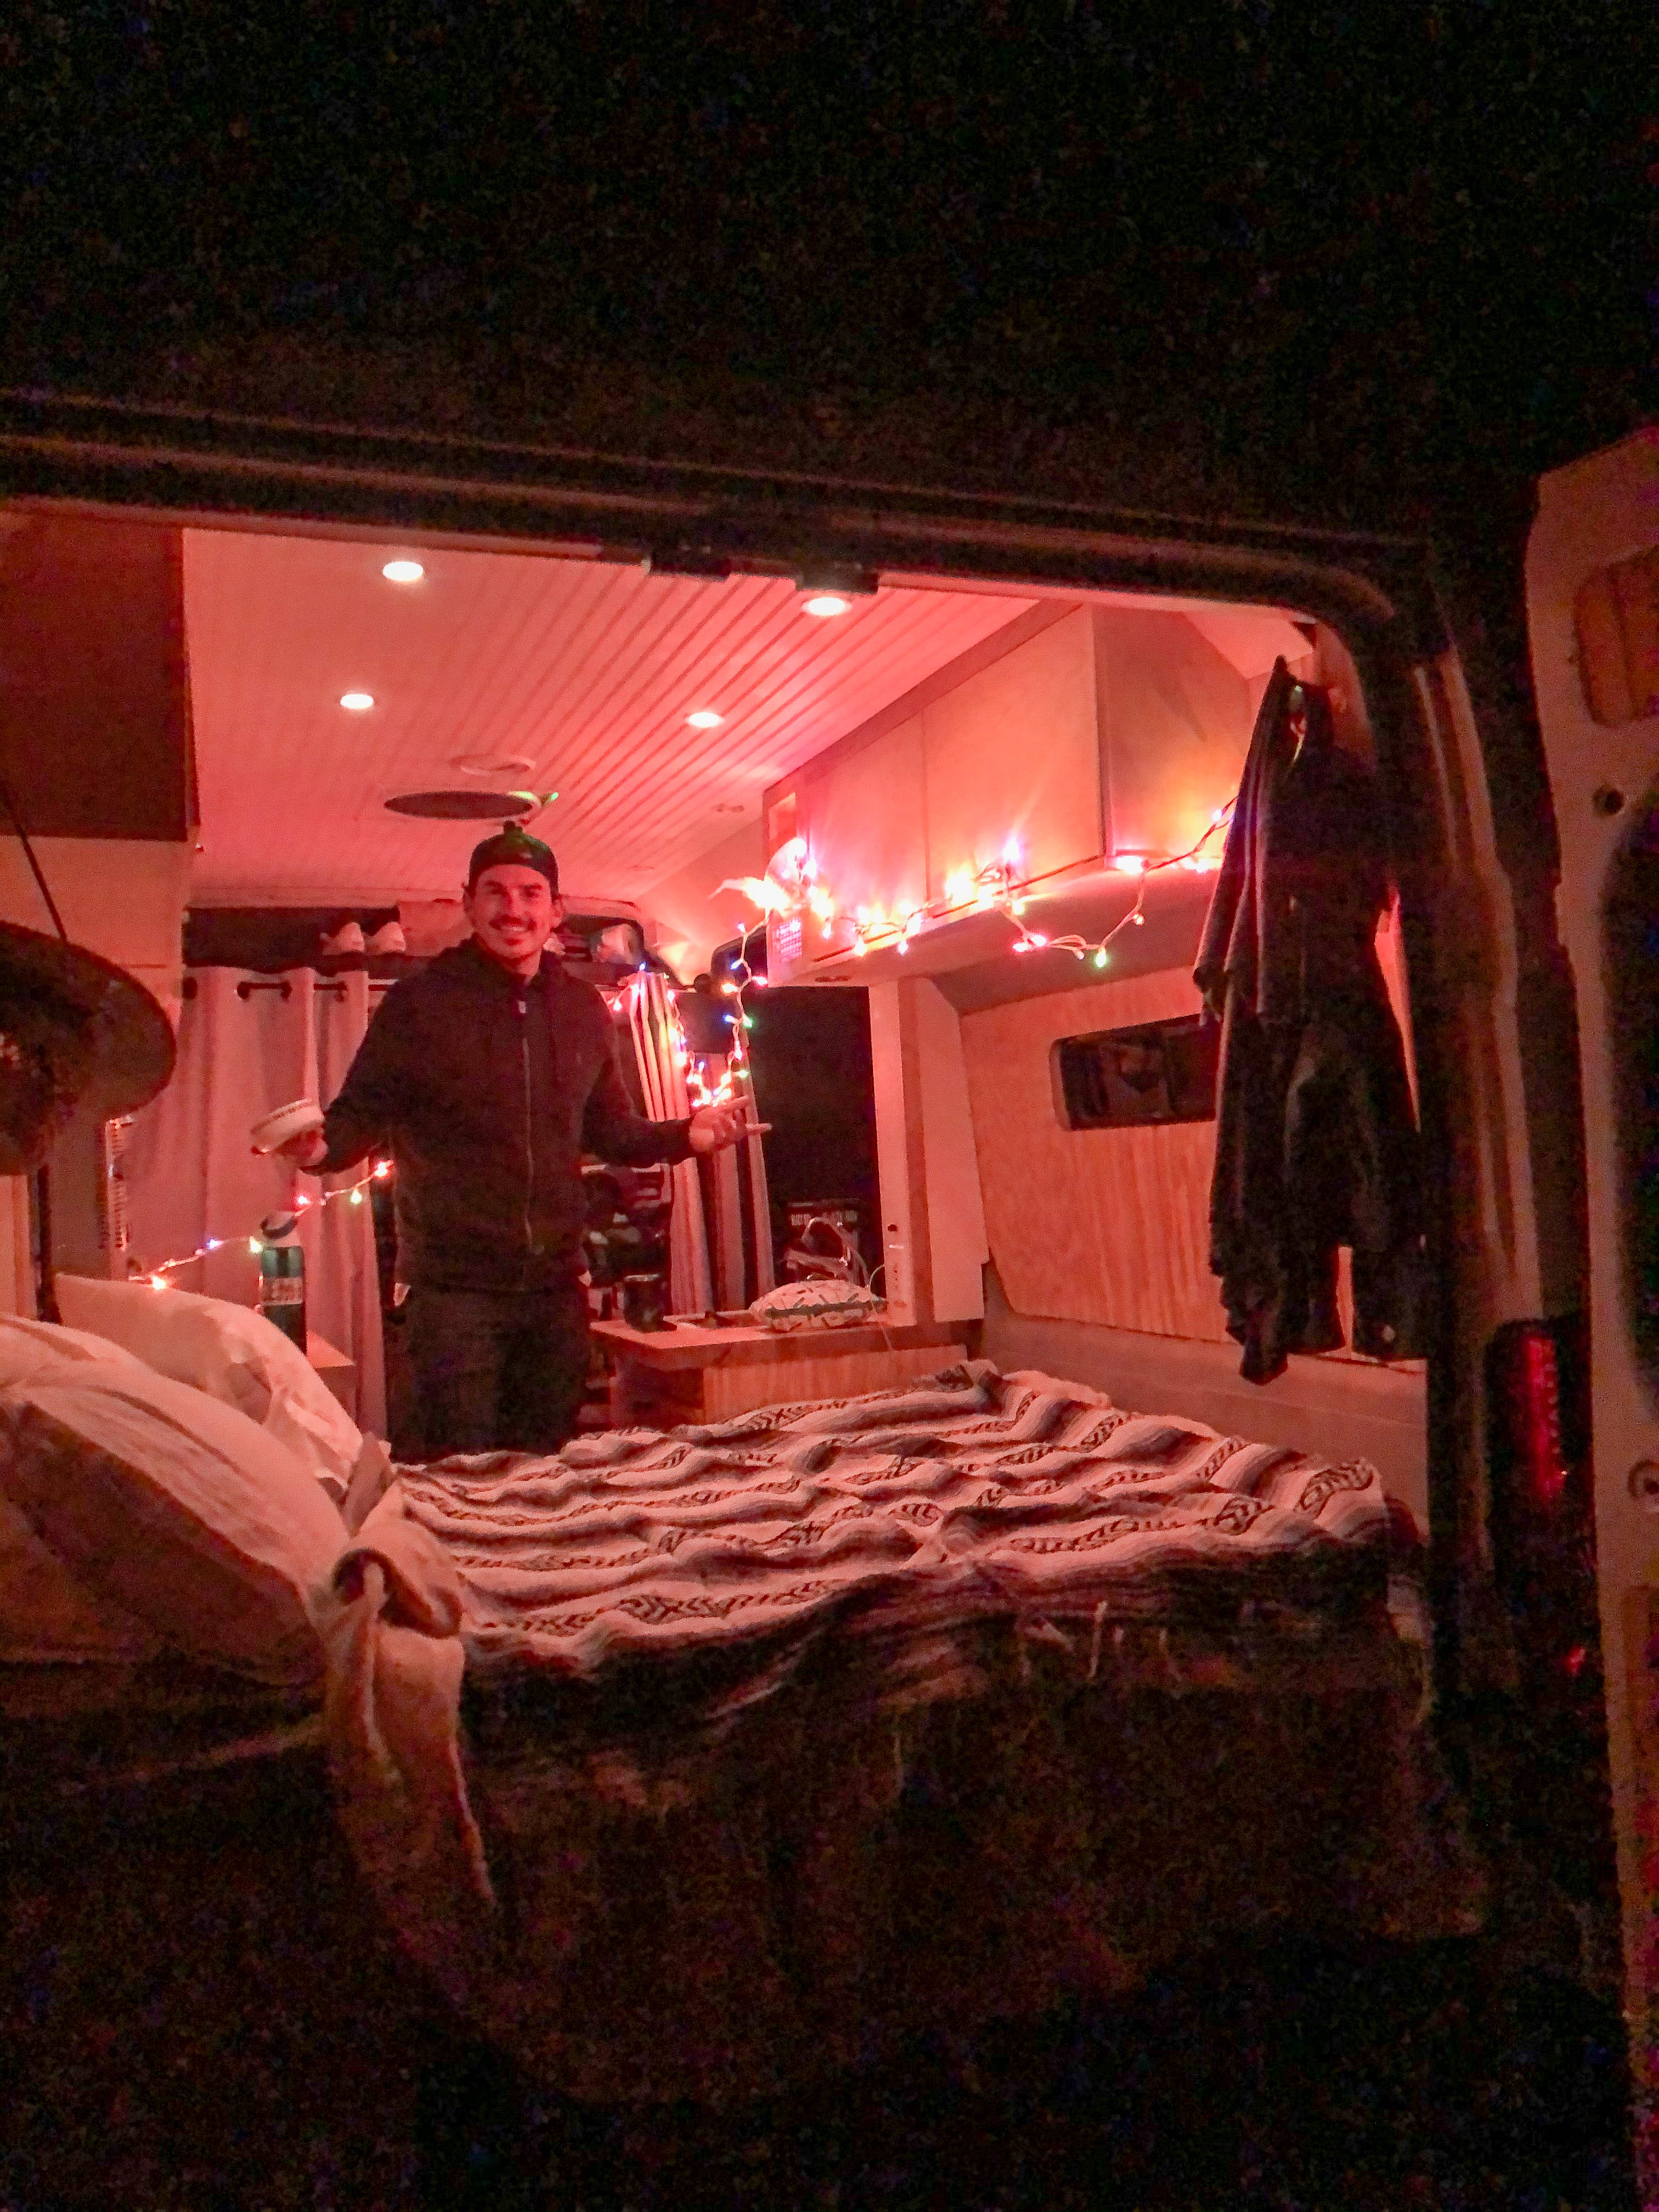 van at night